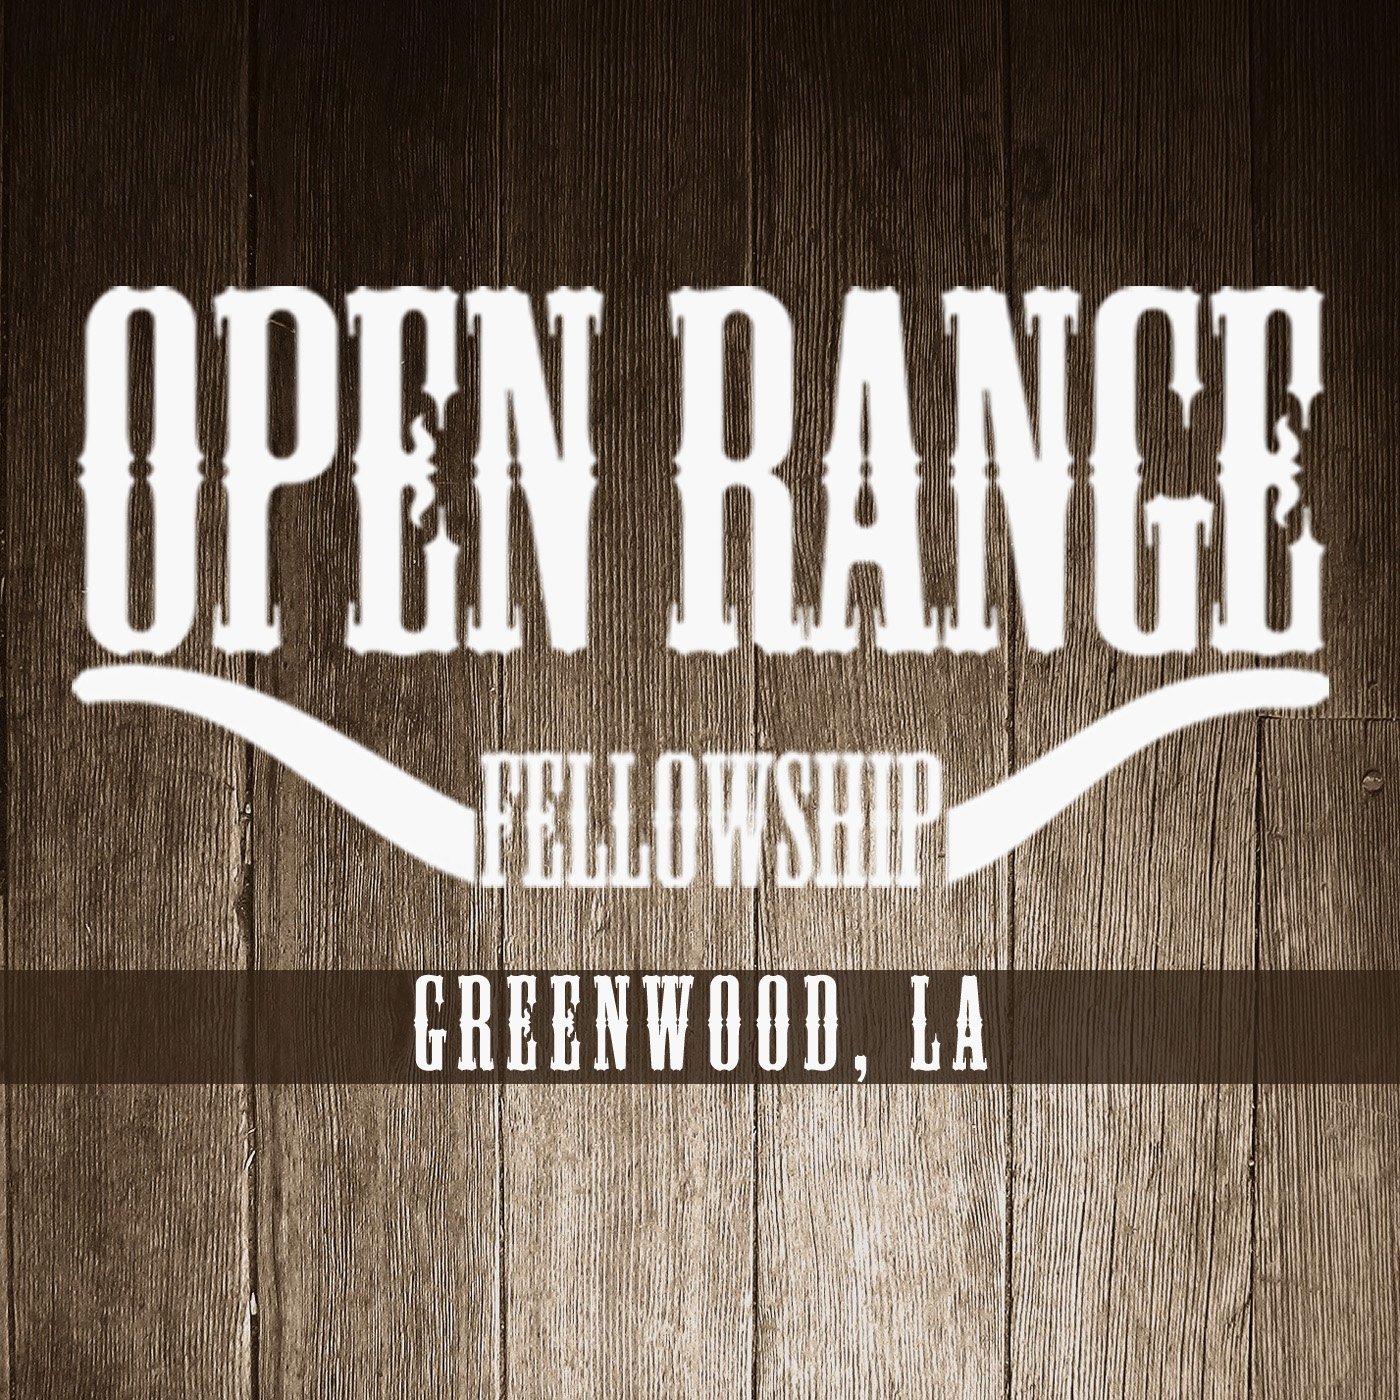 Open Range Fellowship